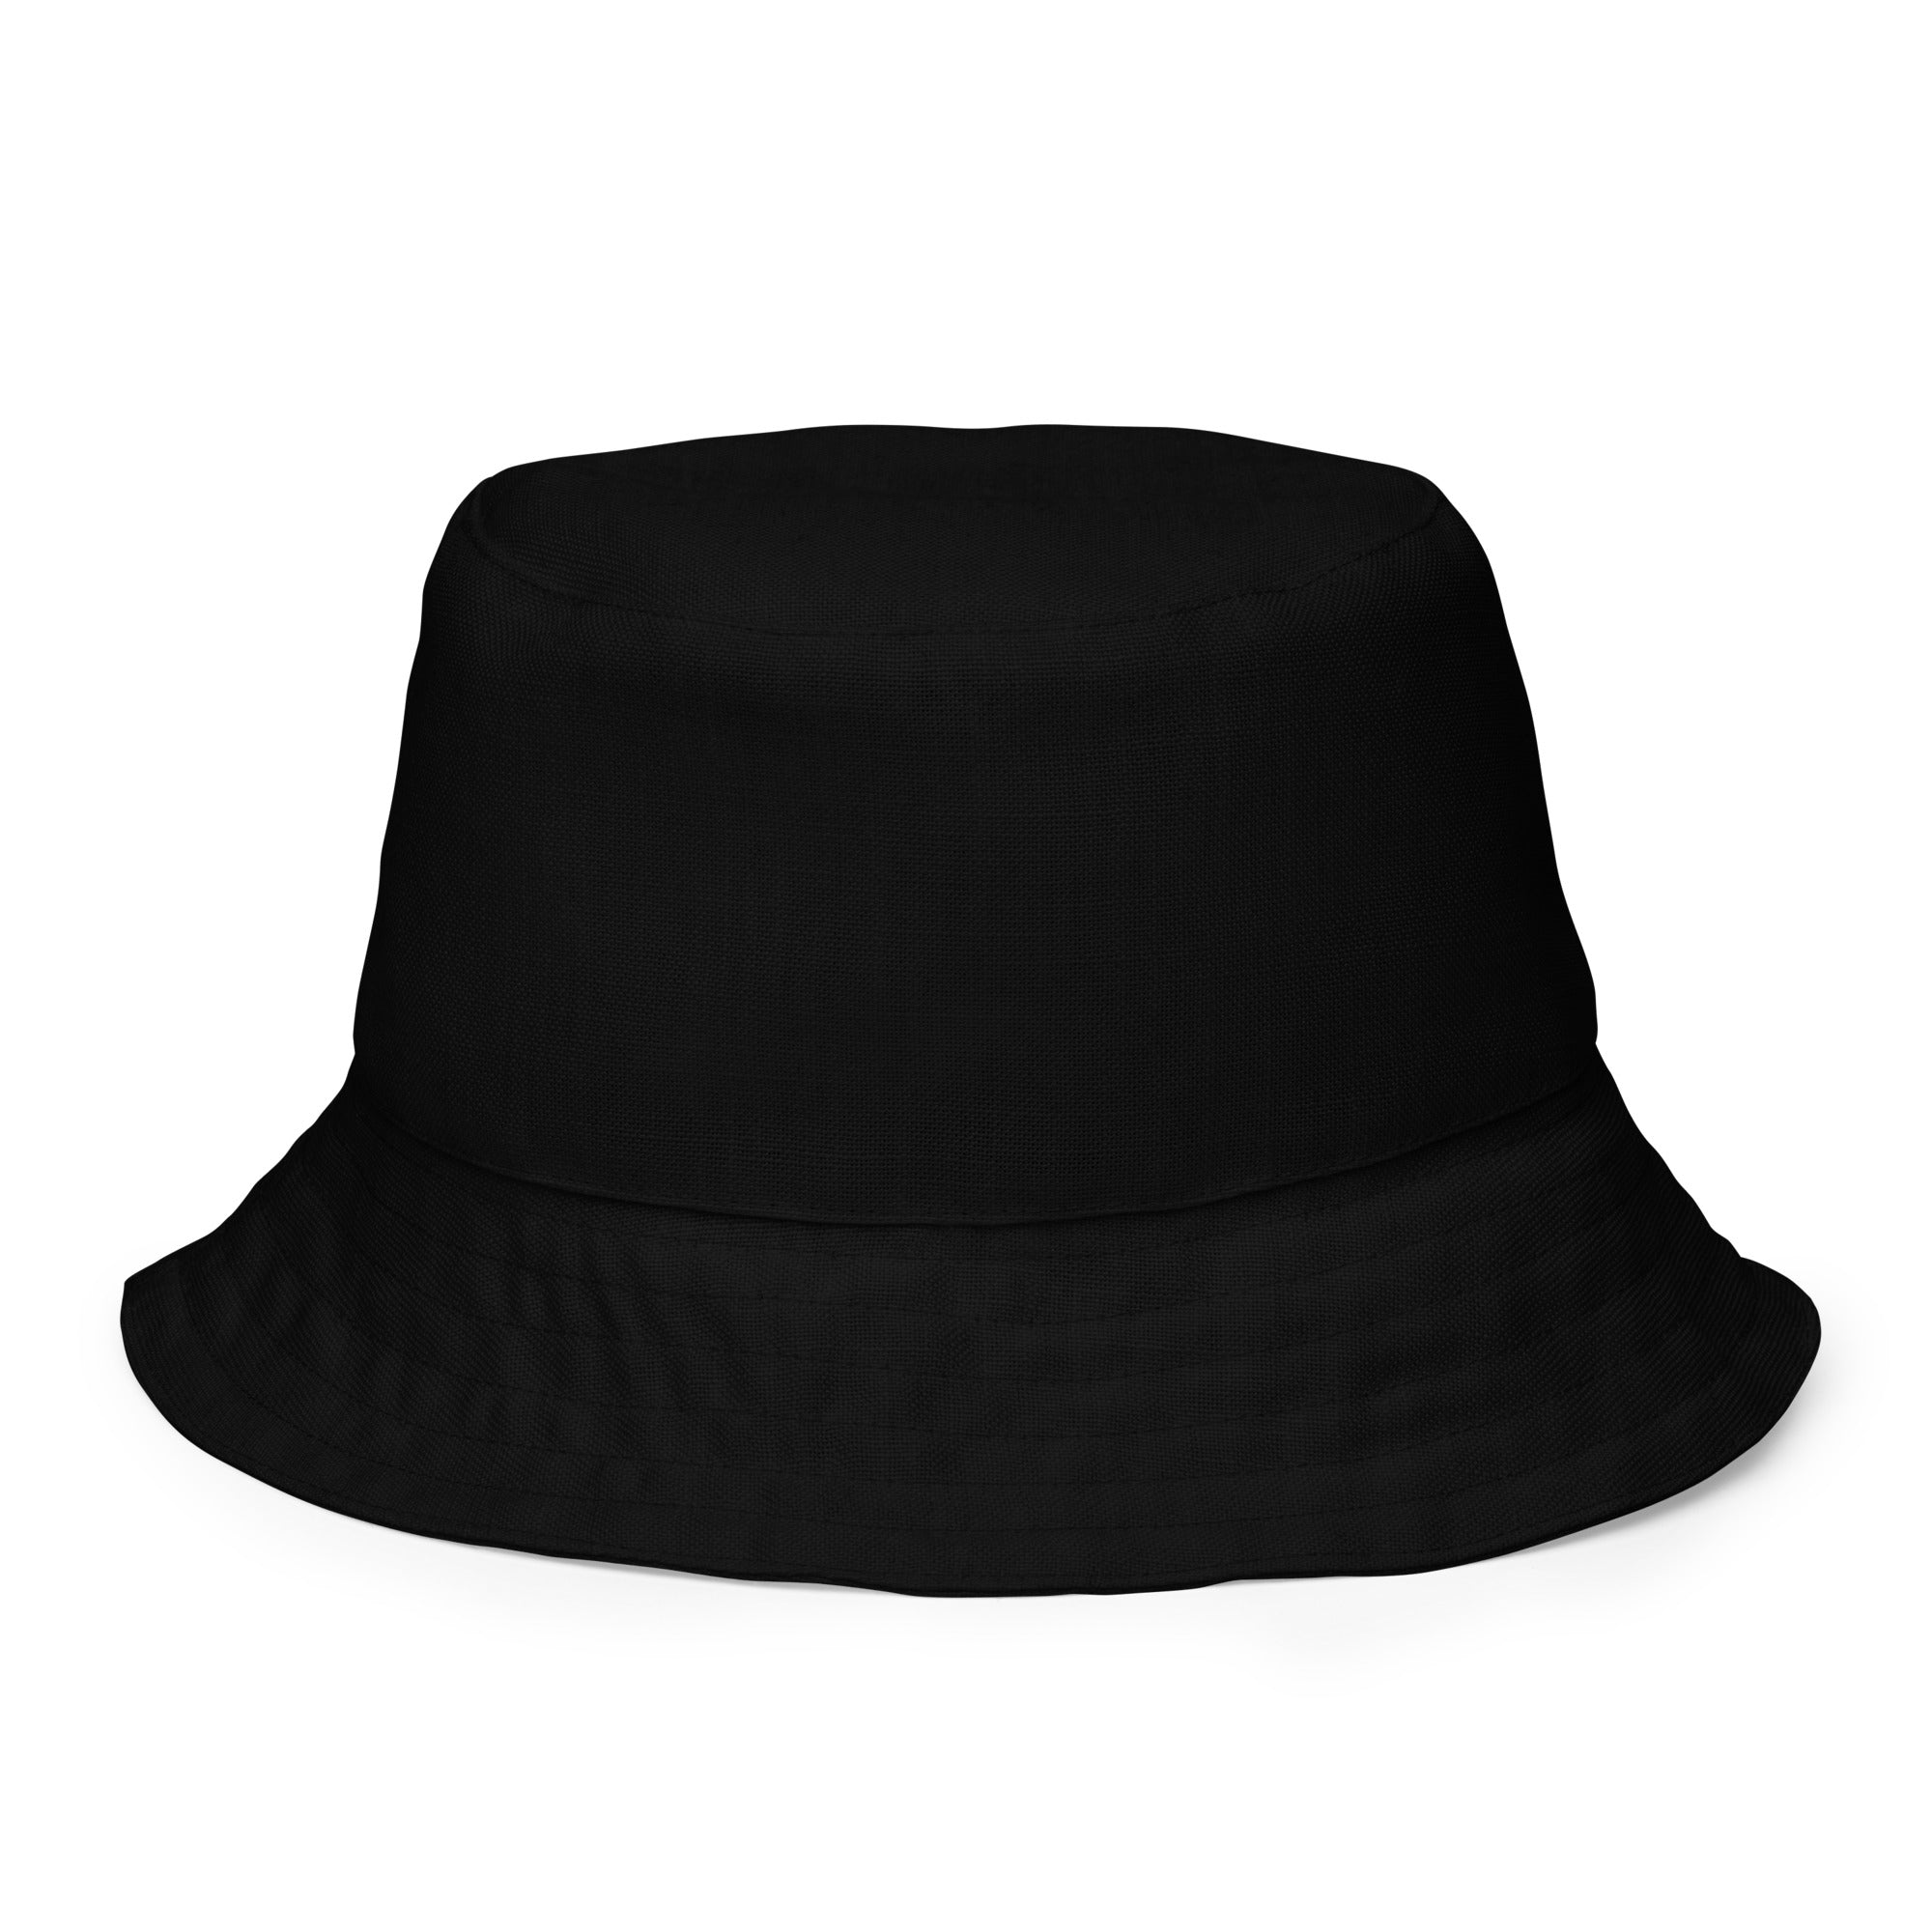 "METAVERSE' Reversible bucket hat